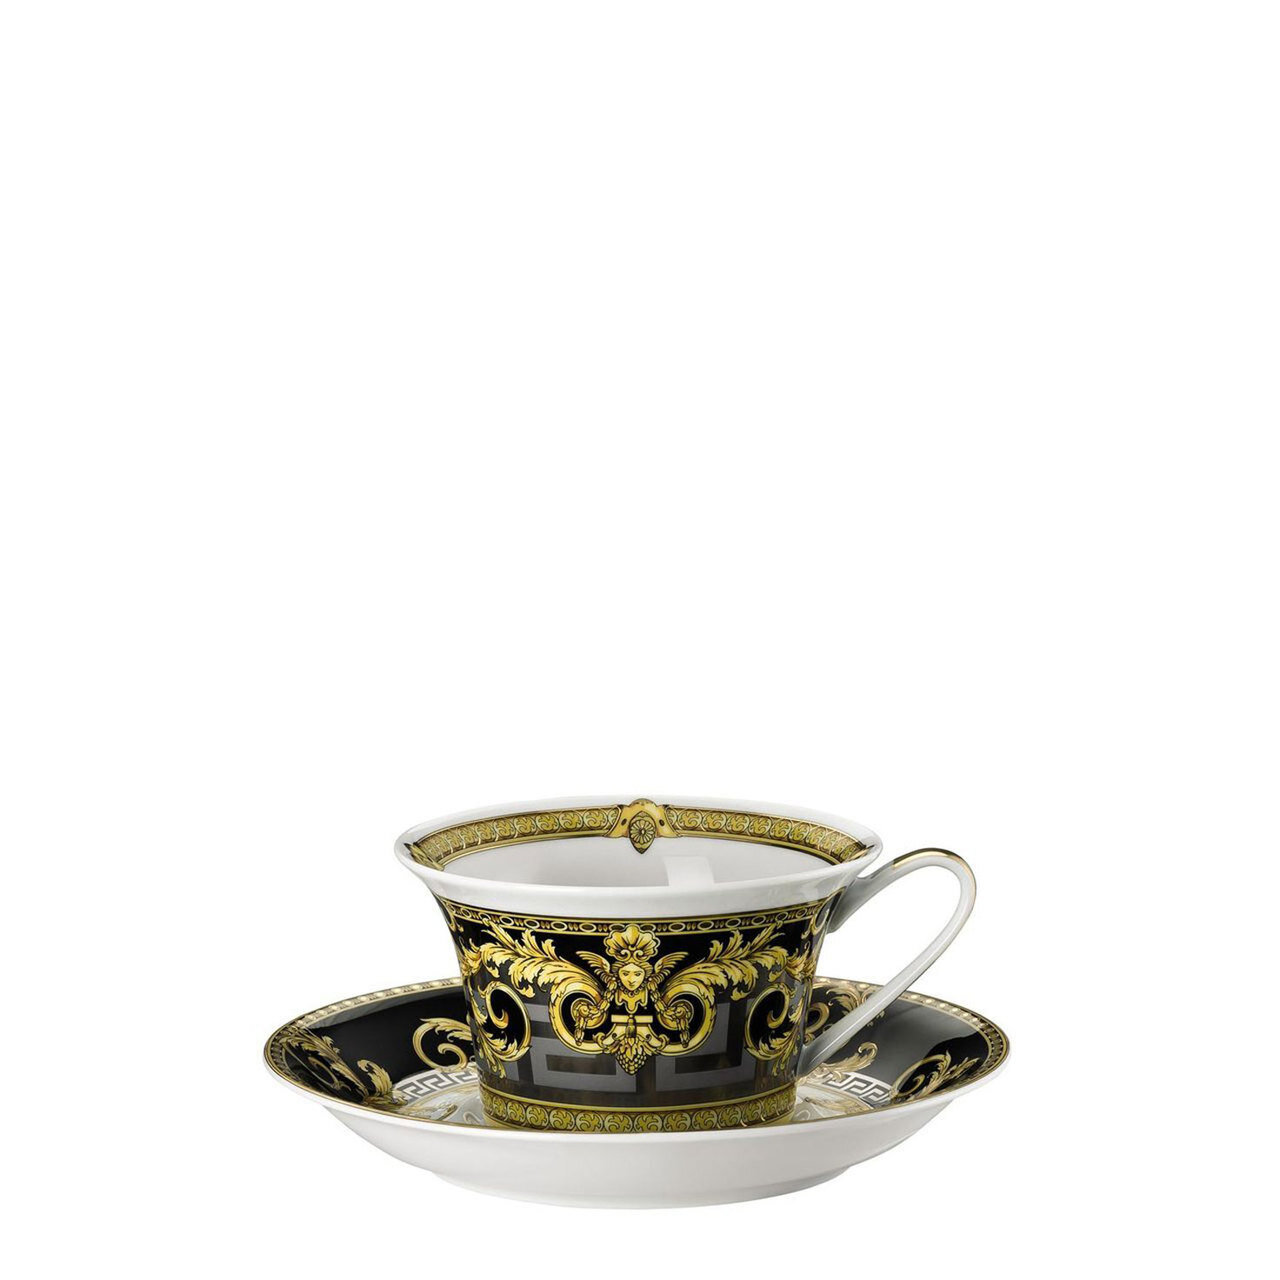 Versace Prestige Gala Tea Cup and Saucer 7 oz.